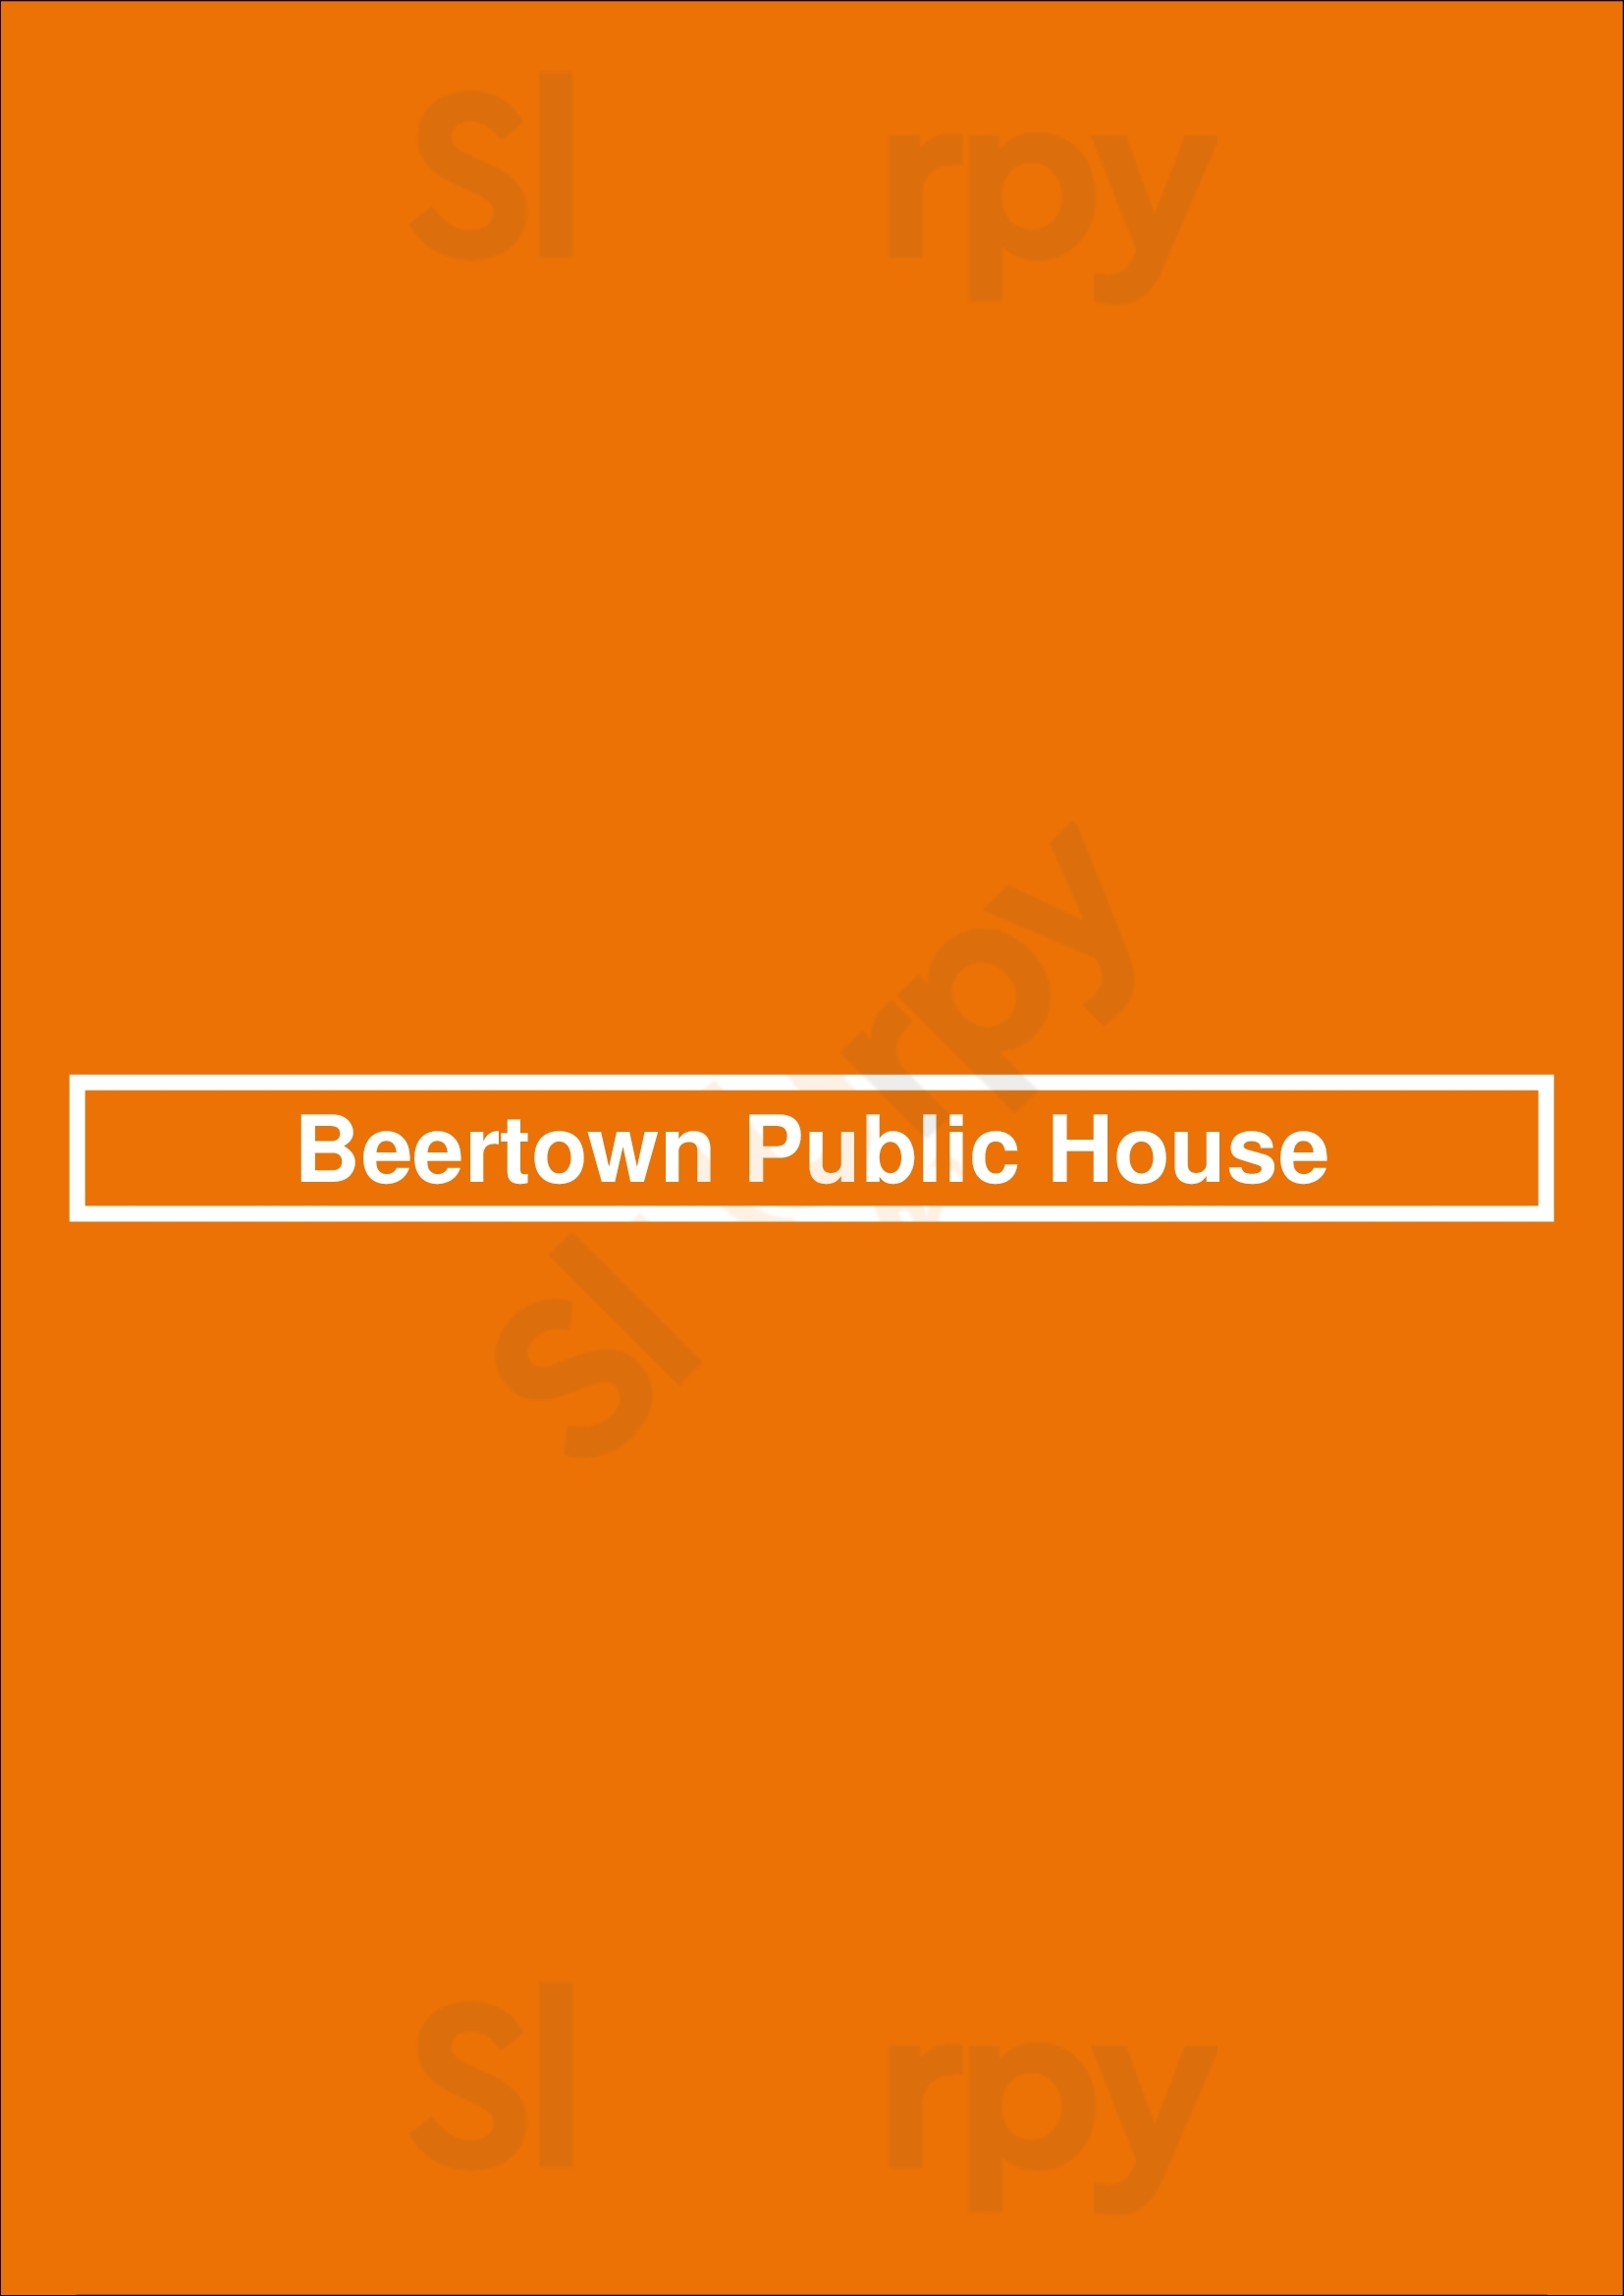 Beertown Public House Cambridge Cambridge Menu - 1